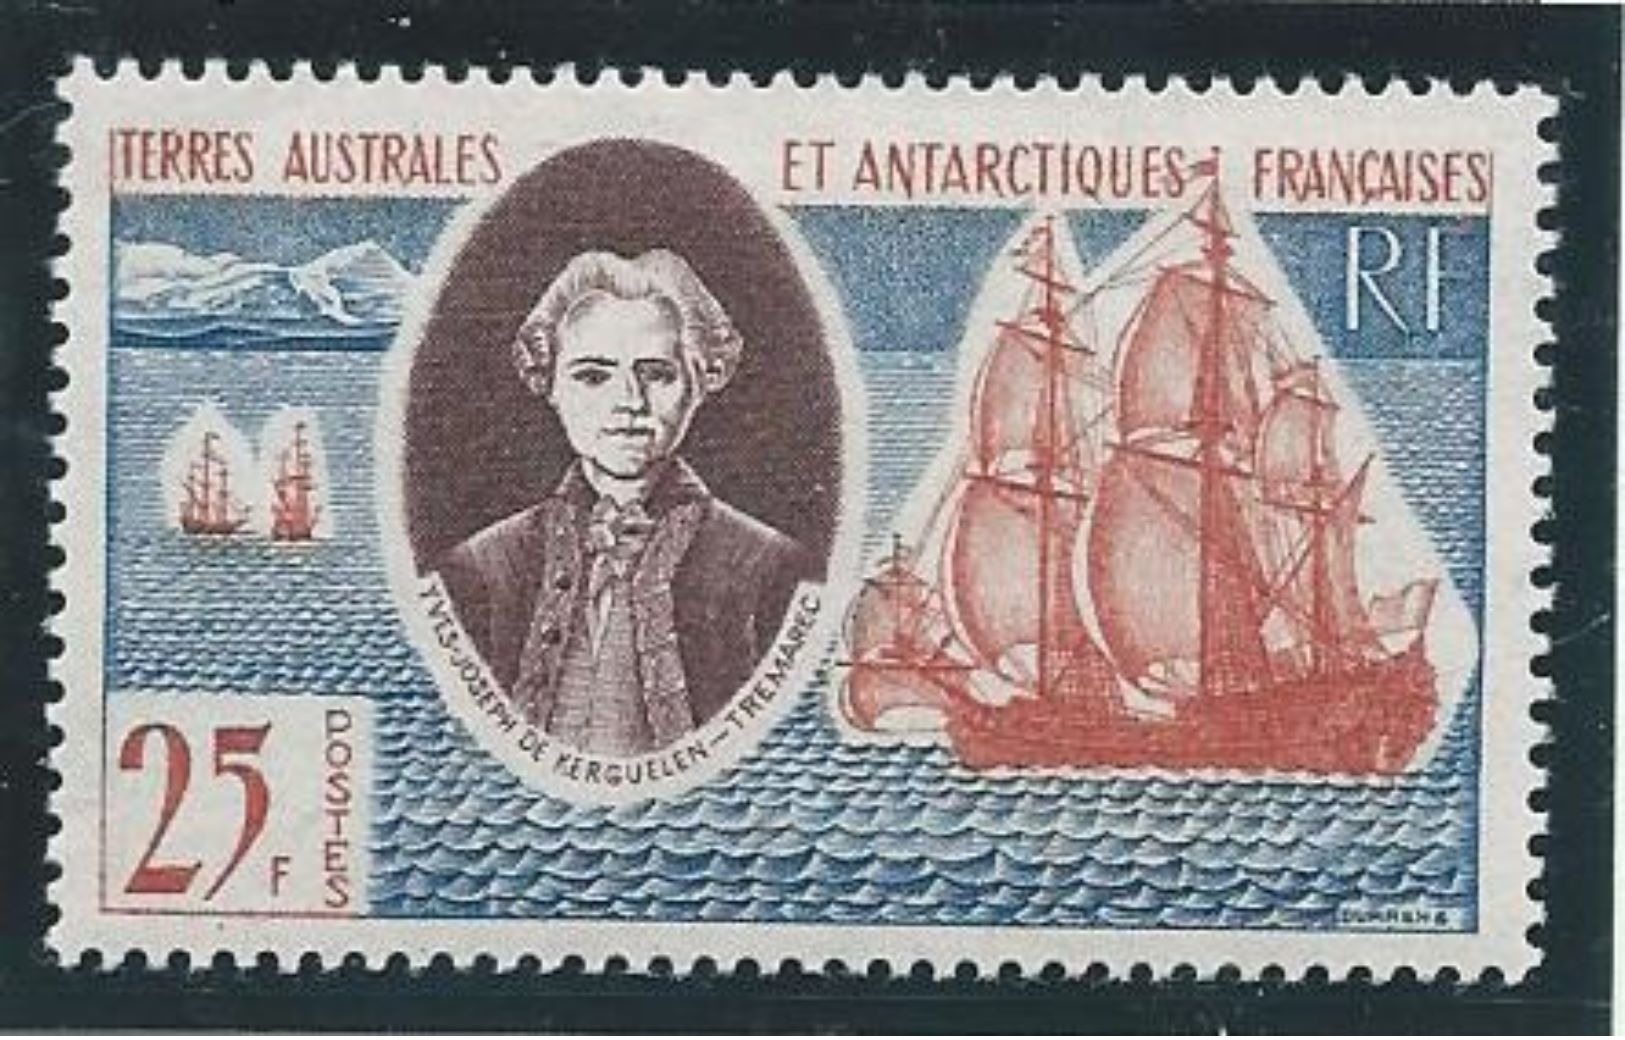 TAAF 1959 - YT N°18 - 25f. - Chevalier Yves Joseph De Kerguelen Trémarec - NEUF* TTB Etat - Unused Stamps